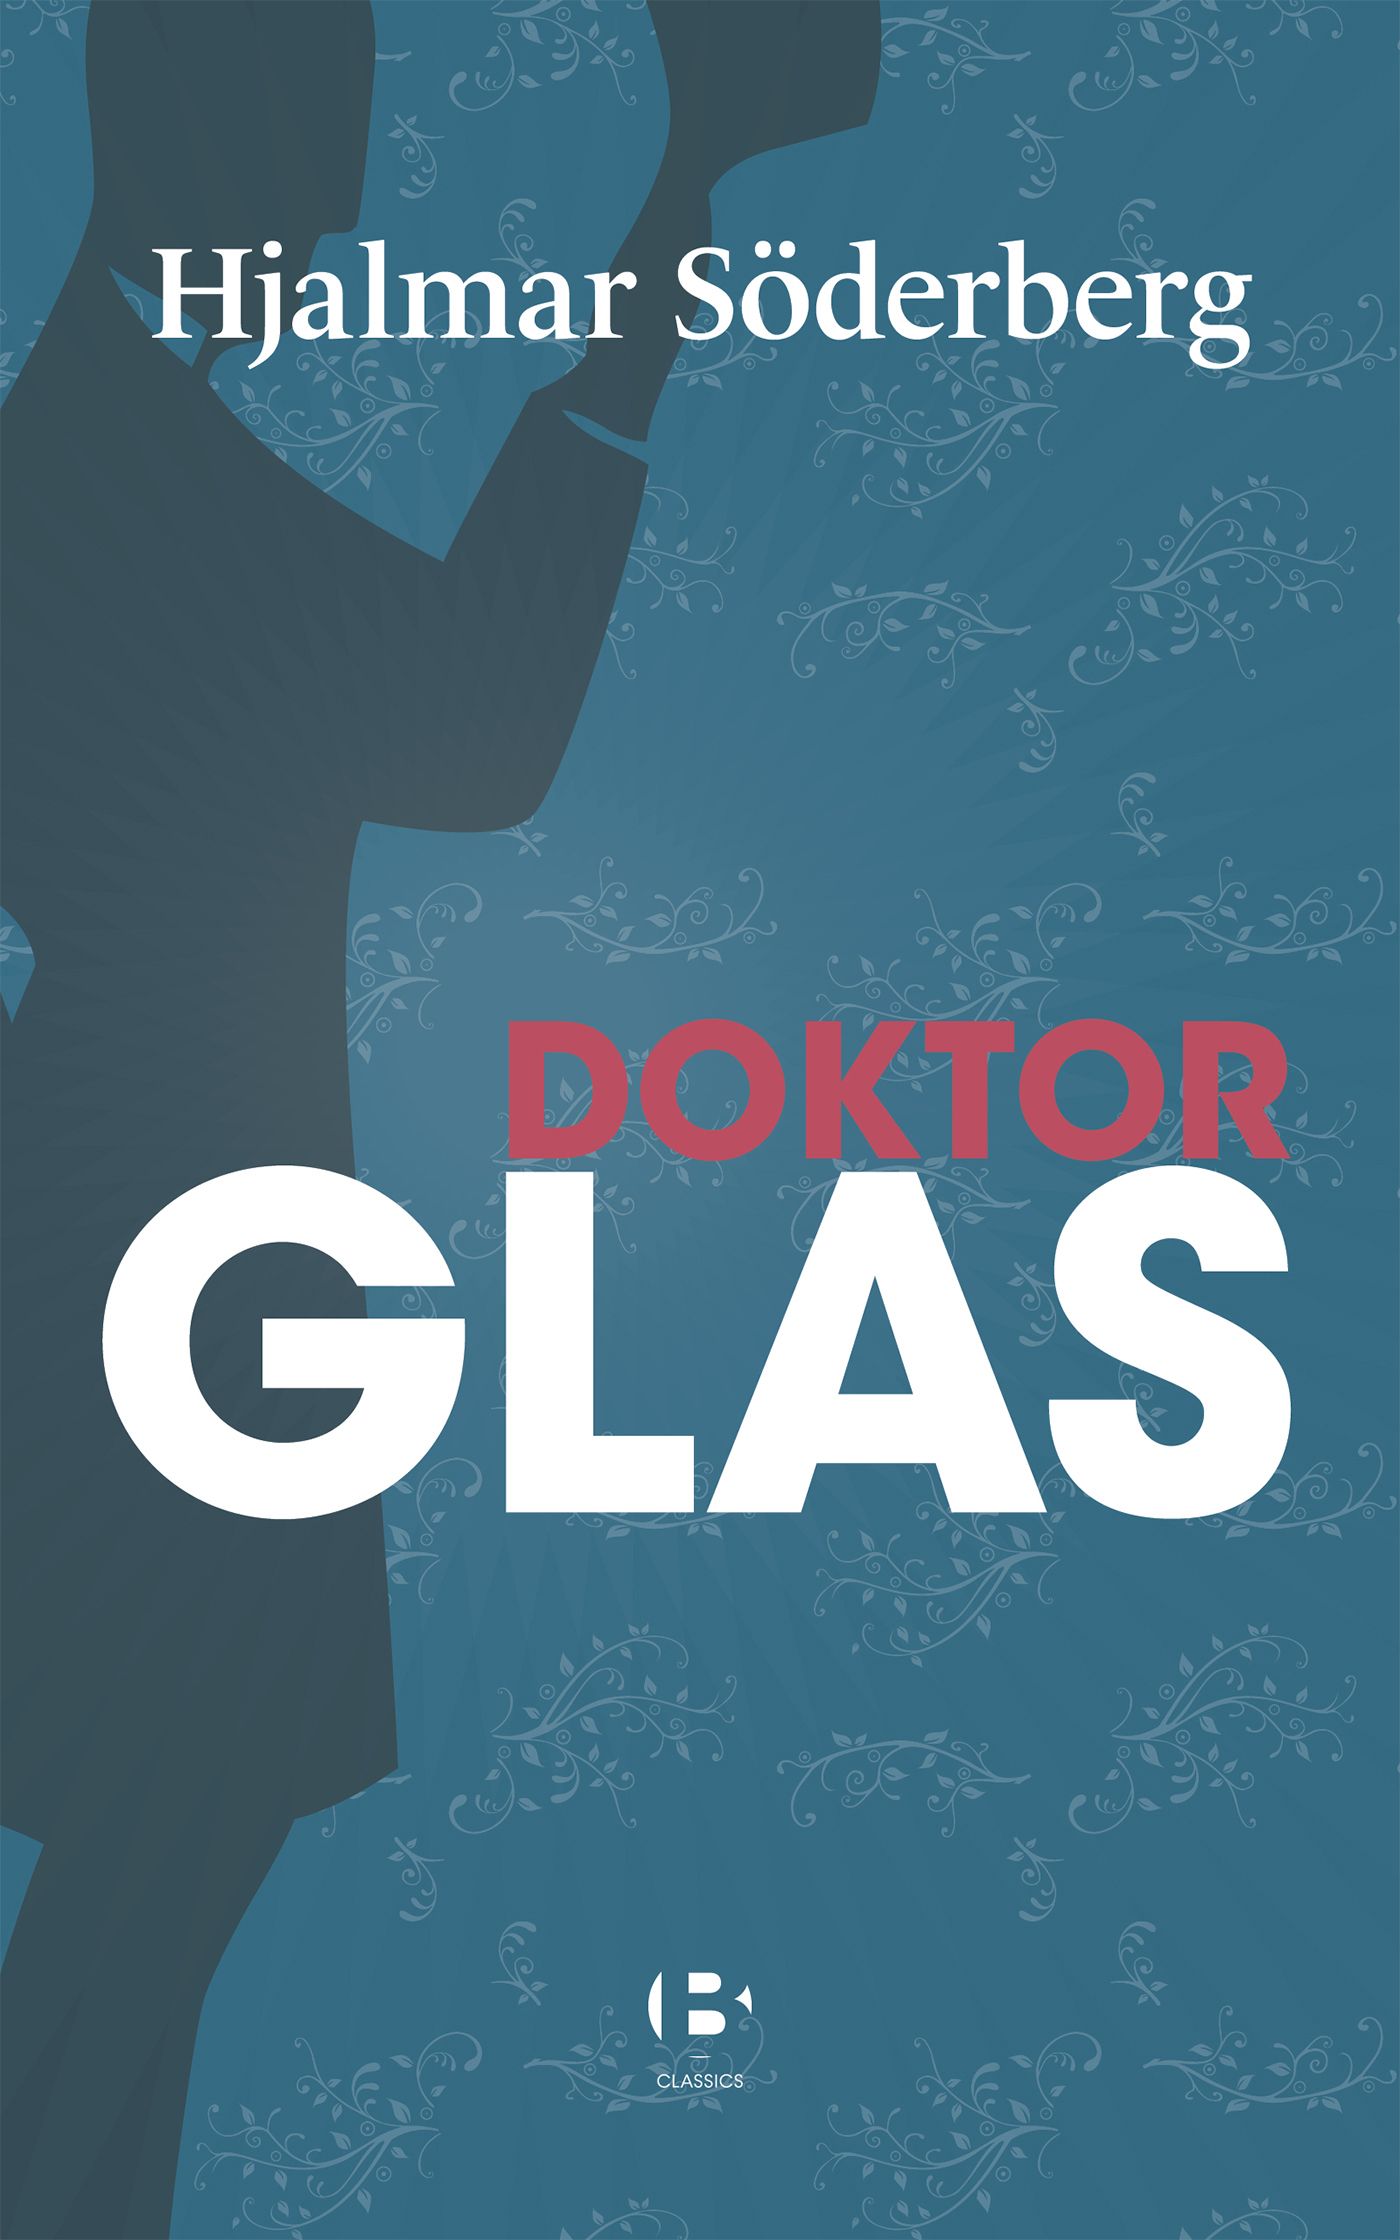 Doktor Glas, e-bog af Hjalmar Söderberg